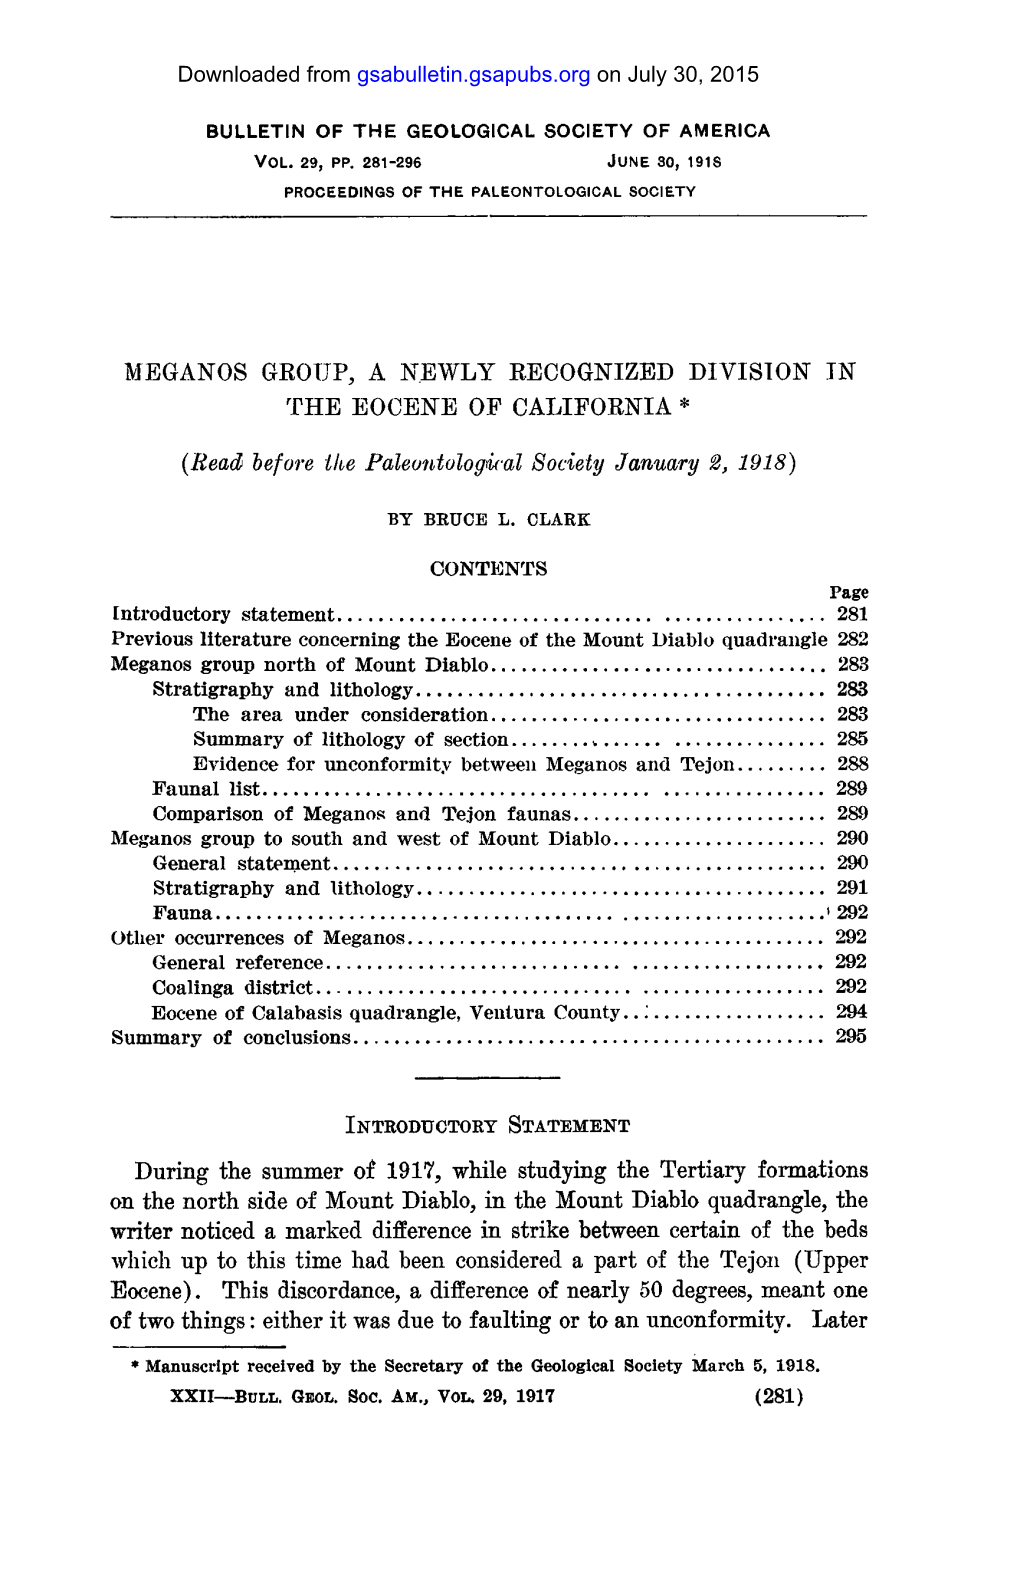 Read Before Llie Paleontological Society January 2, 1918